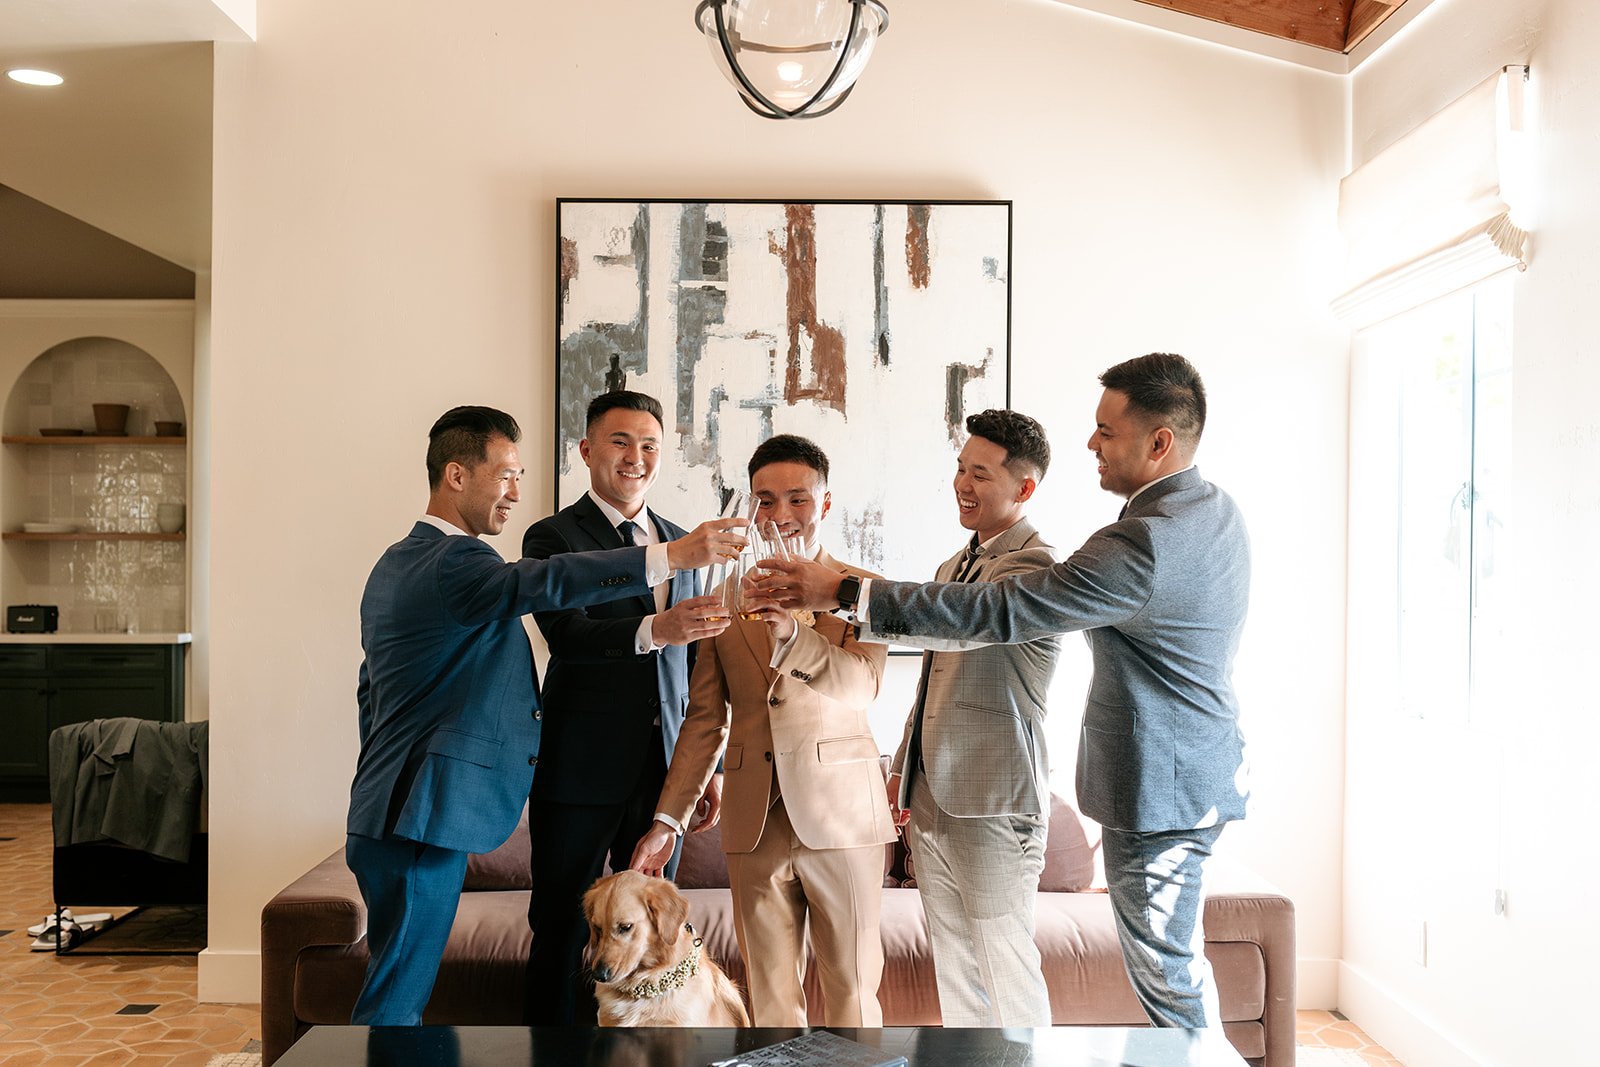 grand gimeno wedding orange county california groomsmen suits groomsmen pictures photos groom getting ready